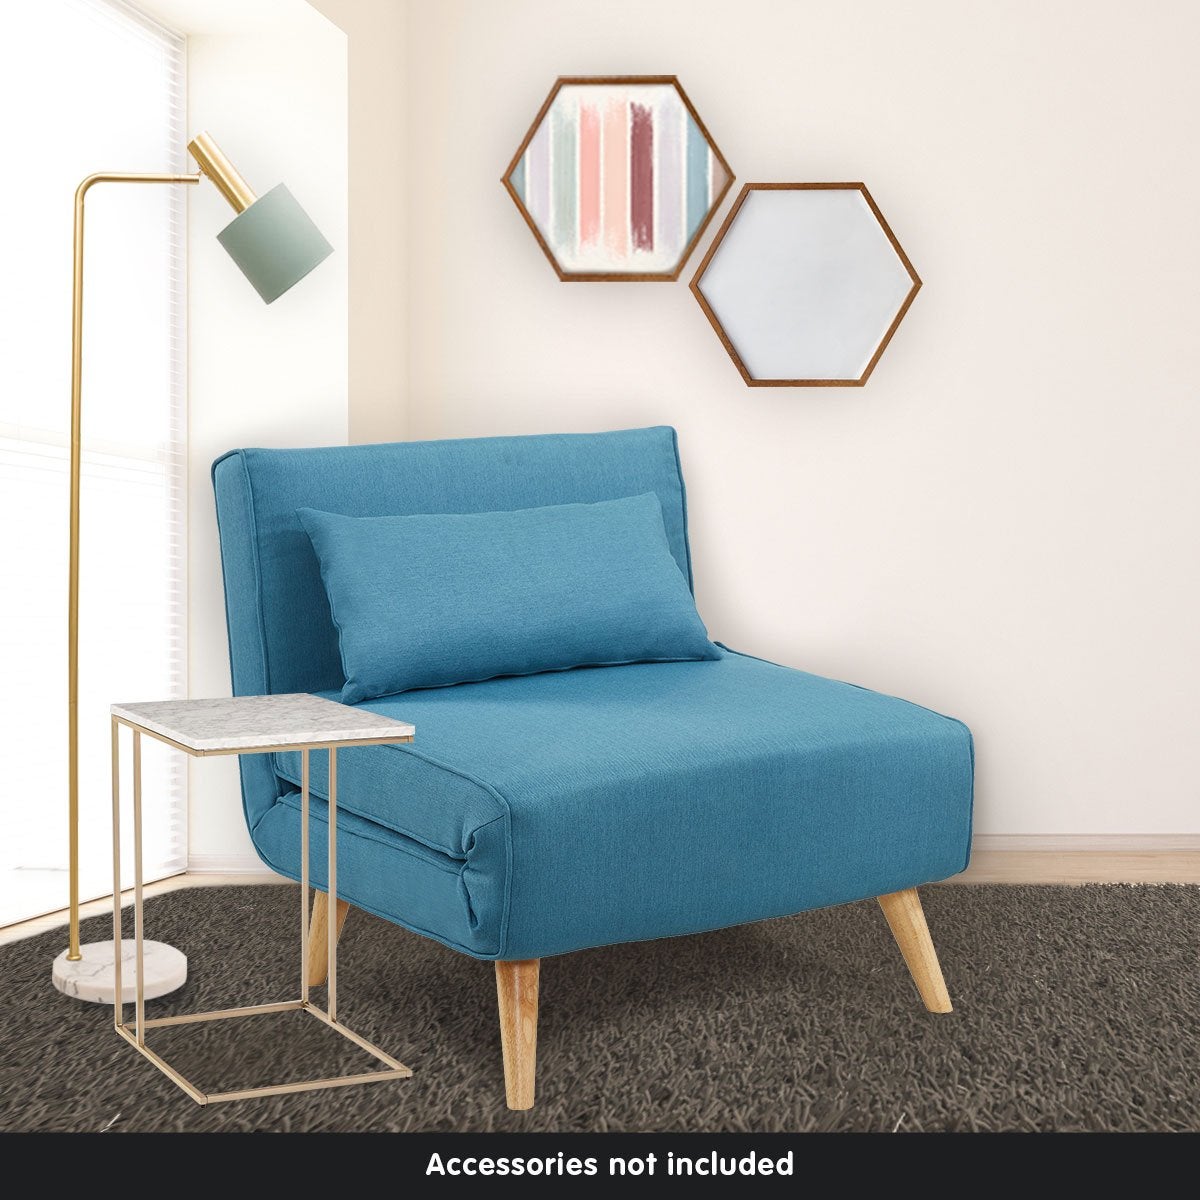 Linen Corner Sofa Bed Comfortable Chair Single Seater Adjustable Wooden Frame Blue 1457602 08 ?v=637282517676571959